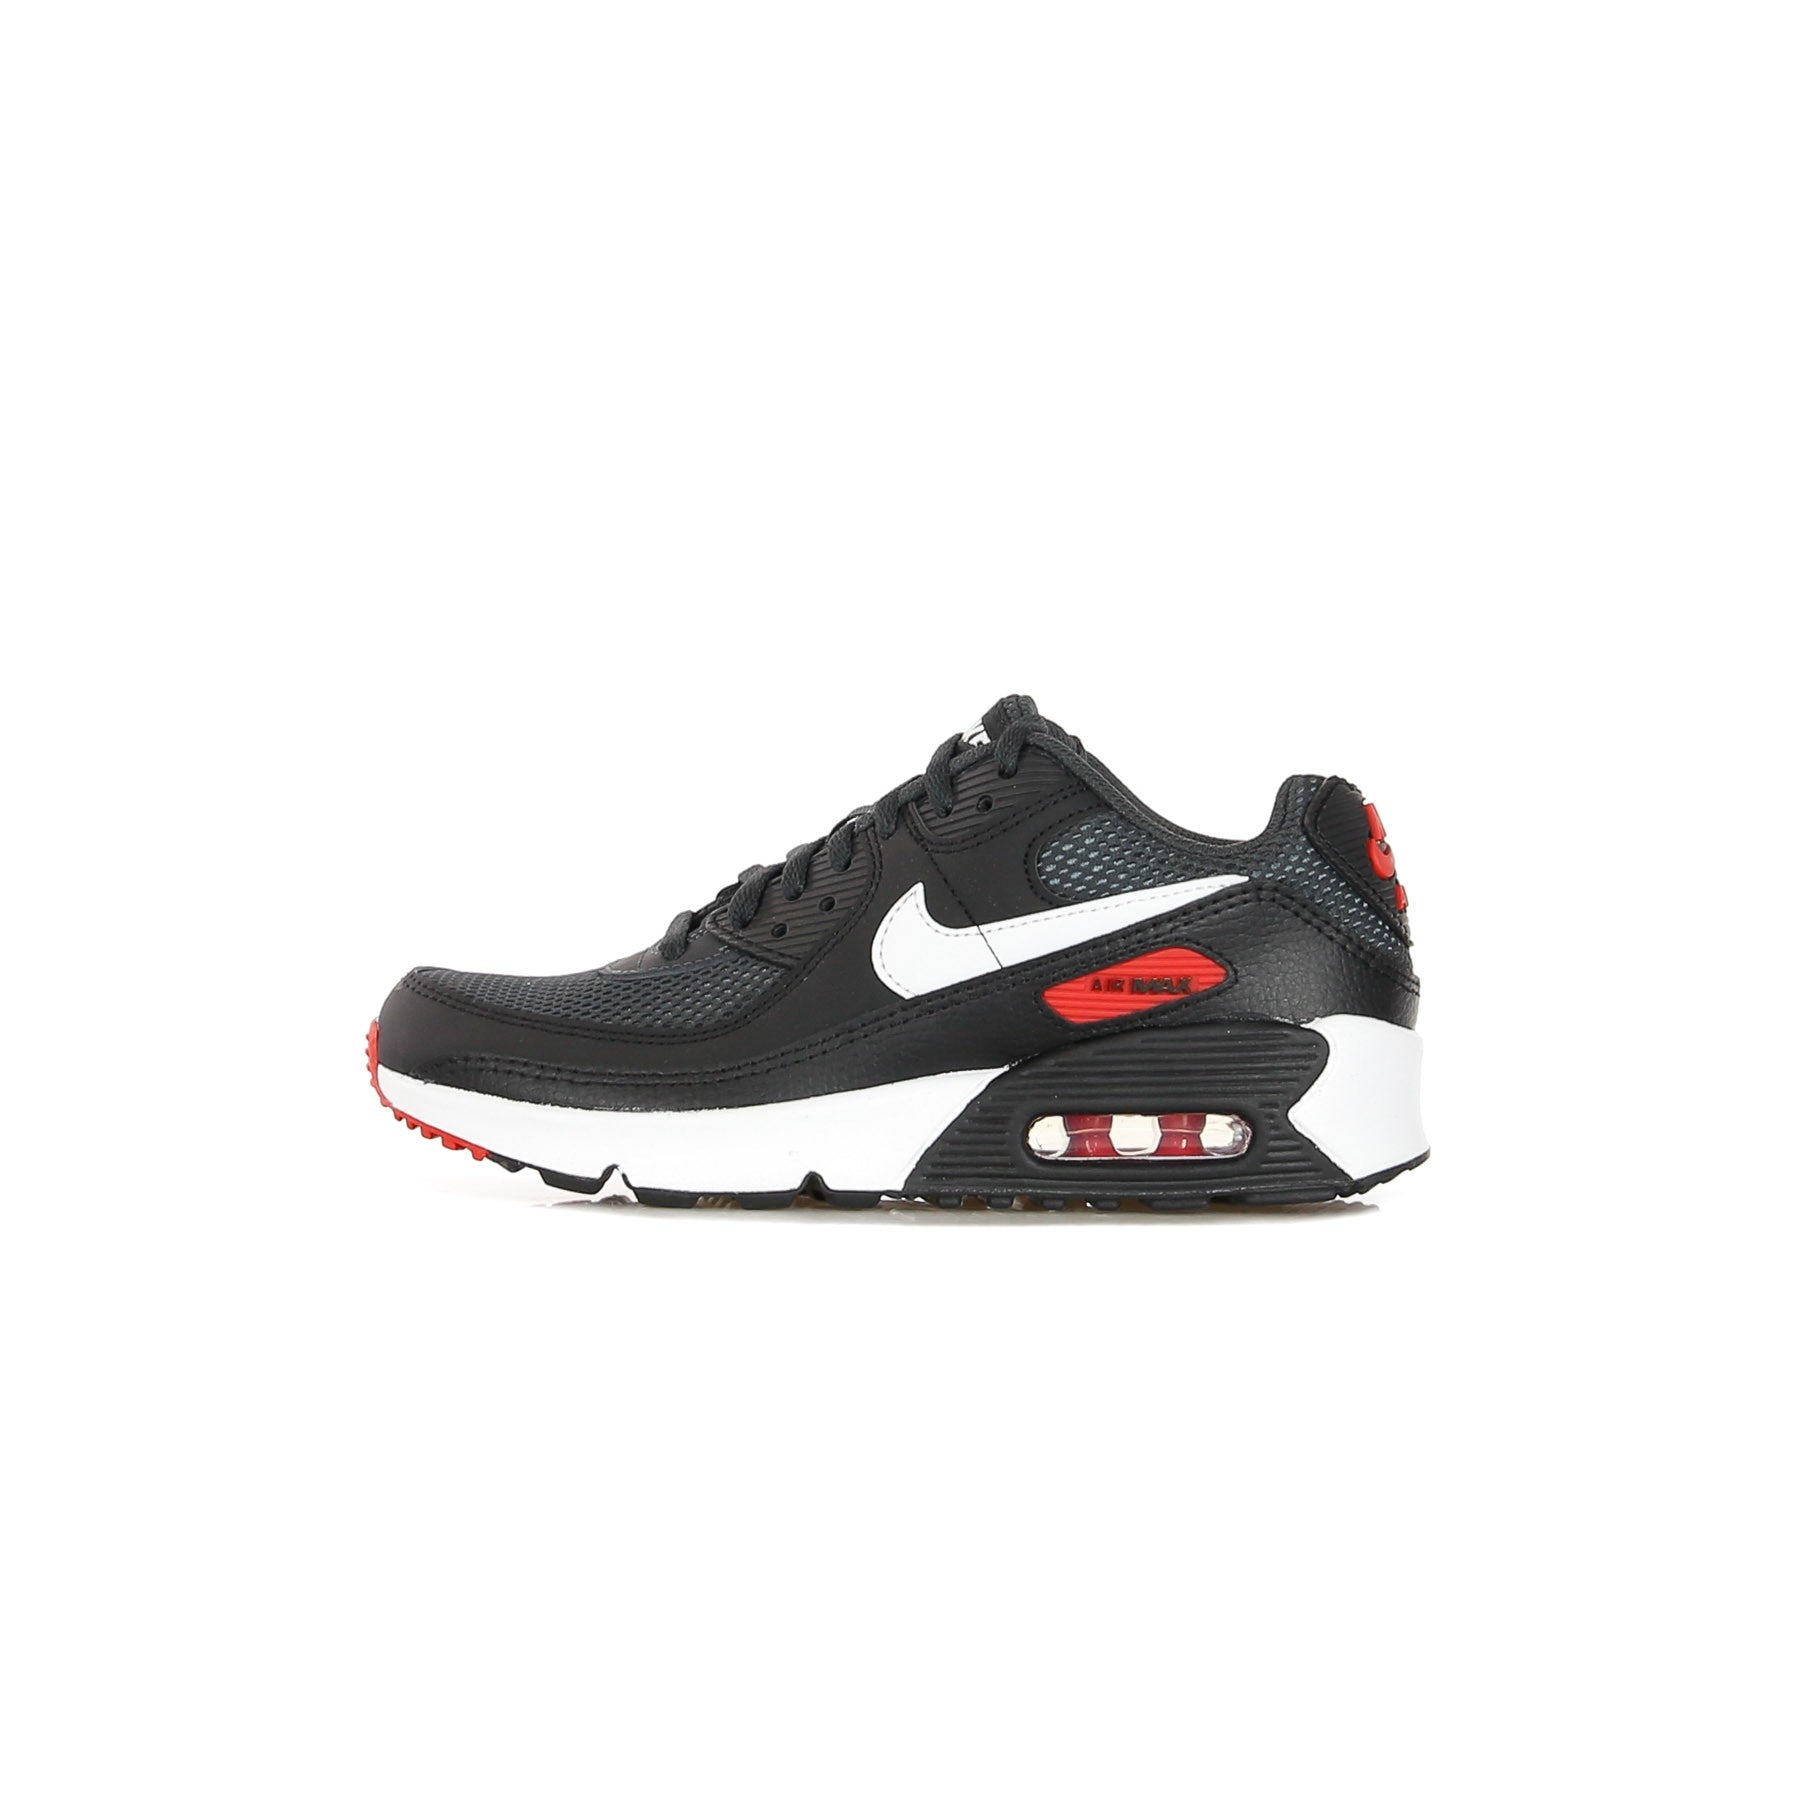 Nike, Scarpa Bassa Ragazzo Air Max 90 (gs), Dk Smoke Grey/white/black/university Red